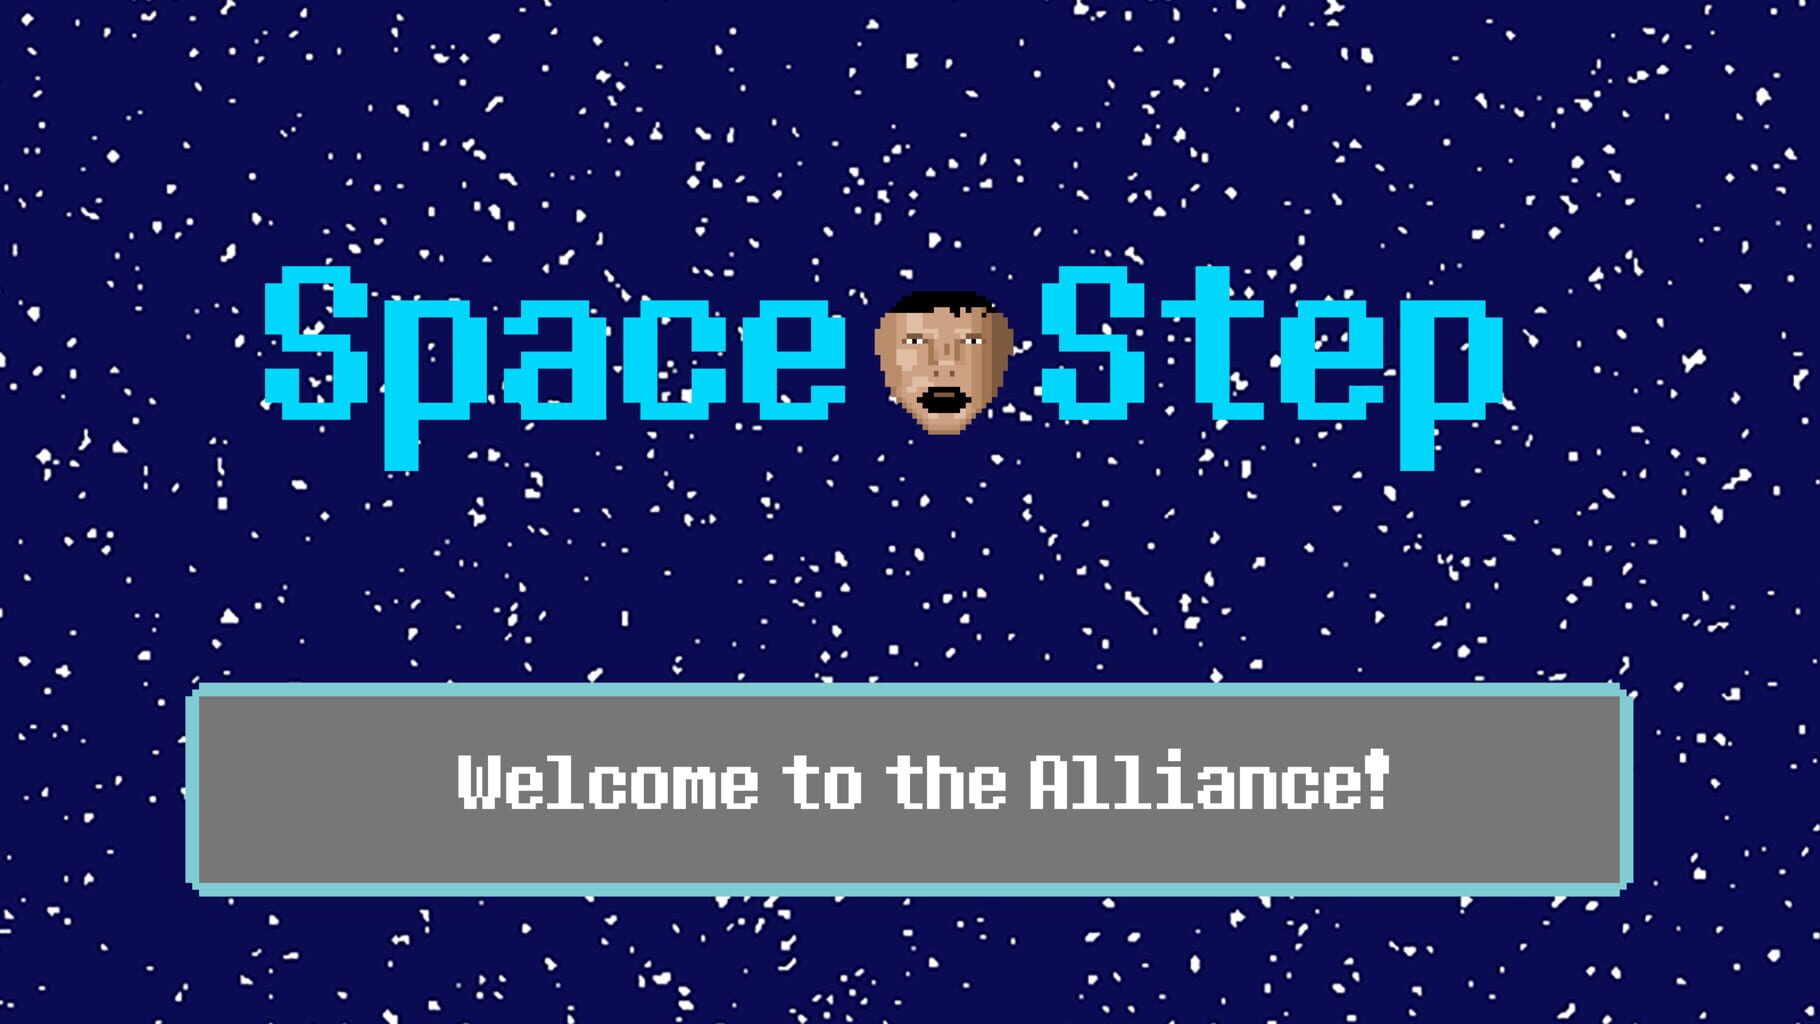 Space step